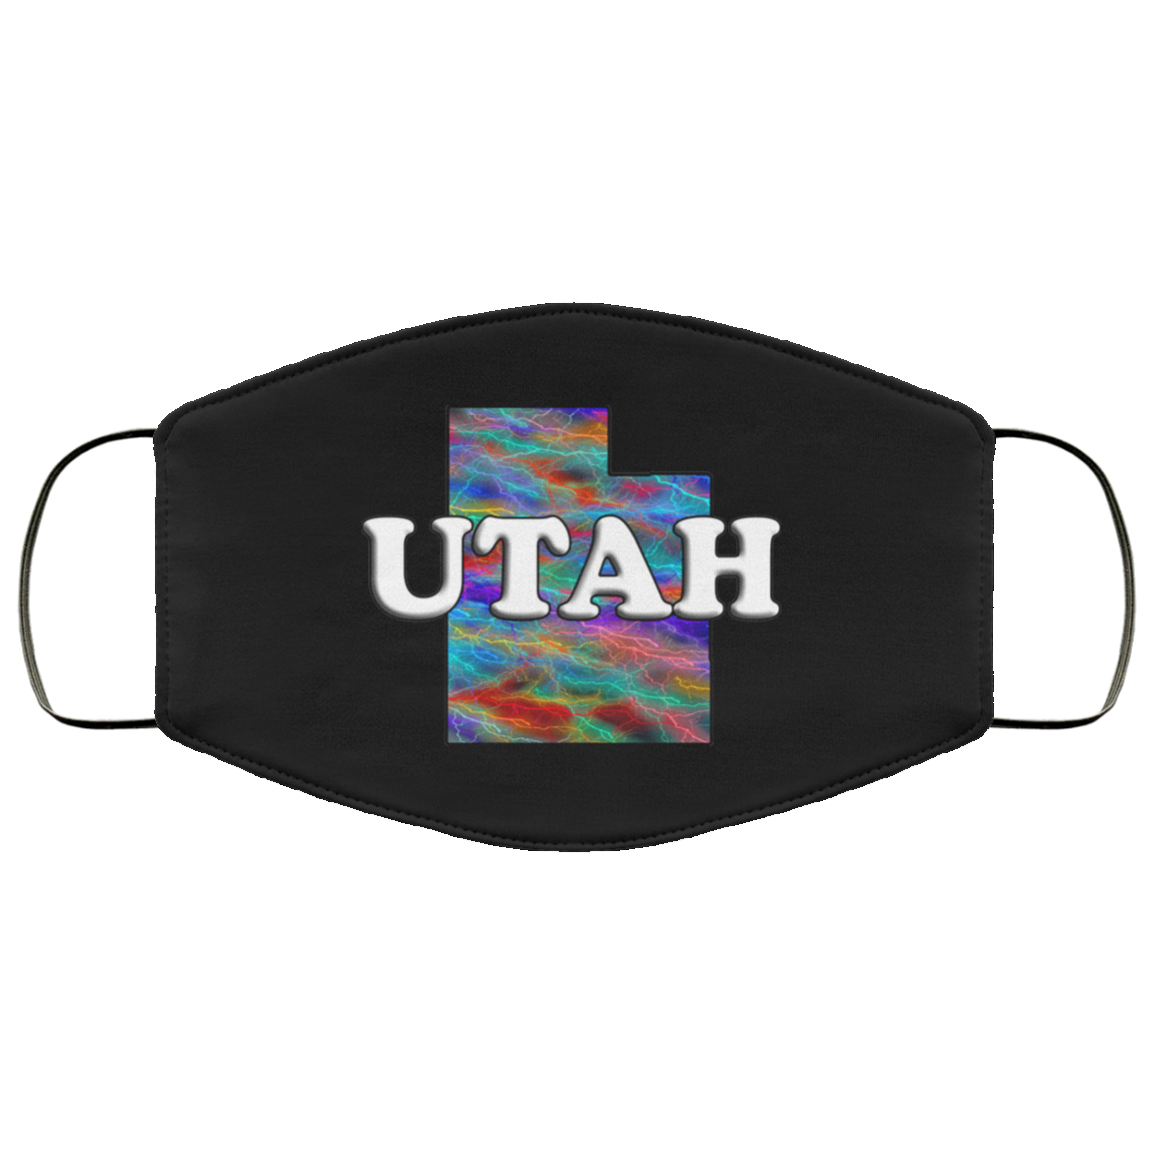 Utah 2 Layer Protective Face Mask